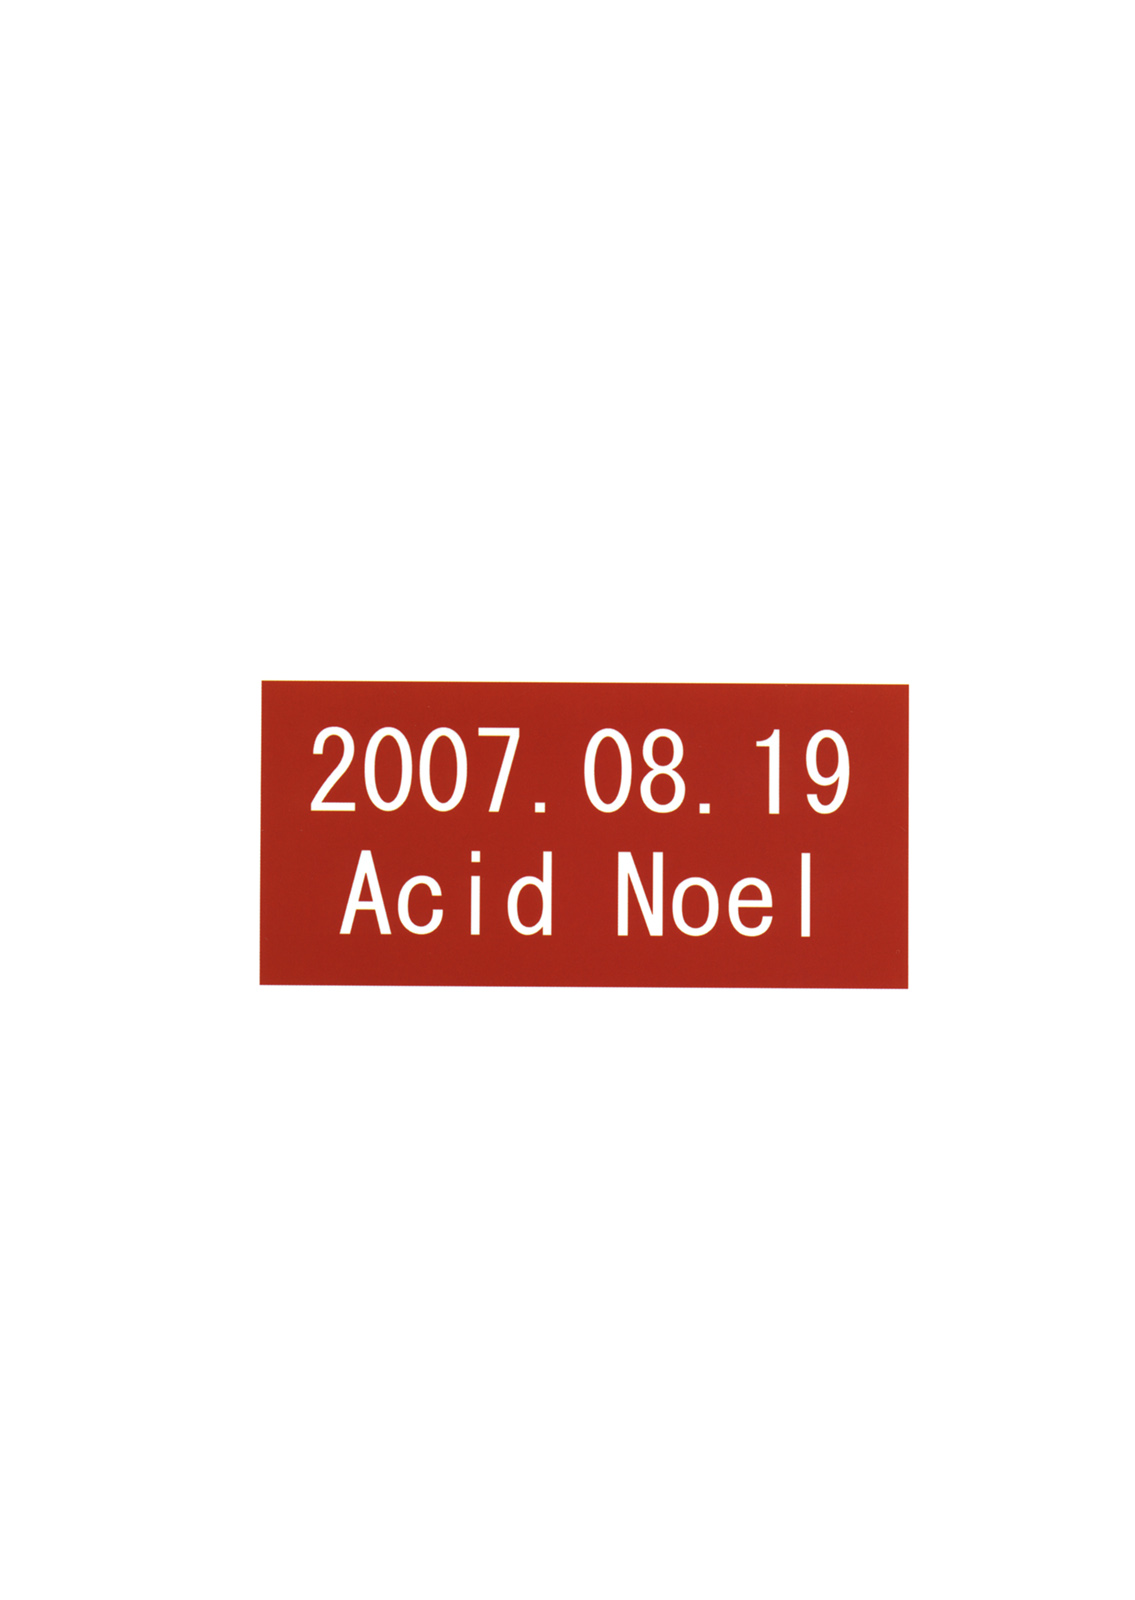 [Acid Noel] THE HYPNOTIZE CONNECTION 